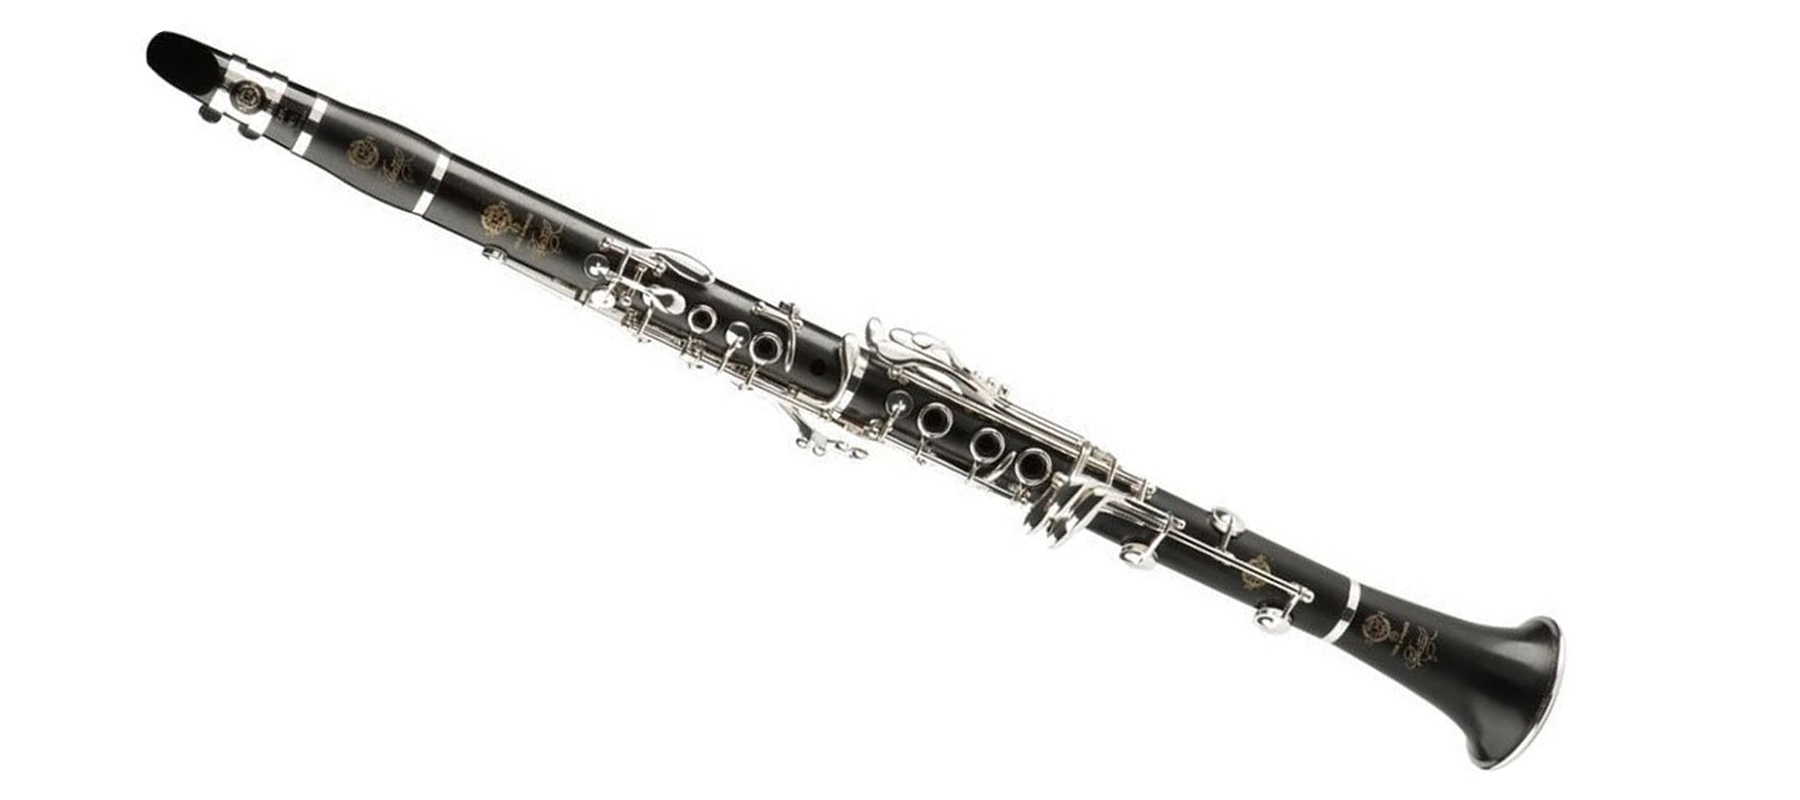 Selmer Privilege Bb Clarinet - Buy your clarinet in Paris